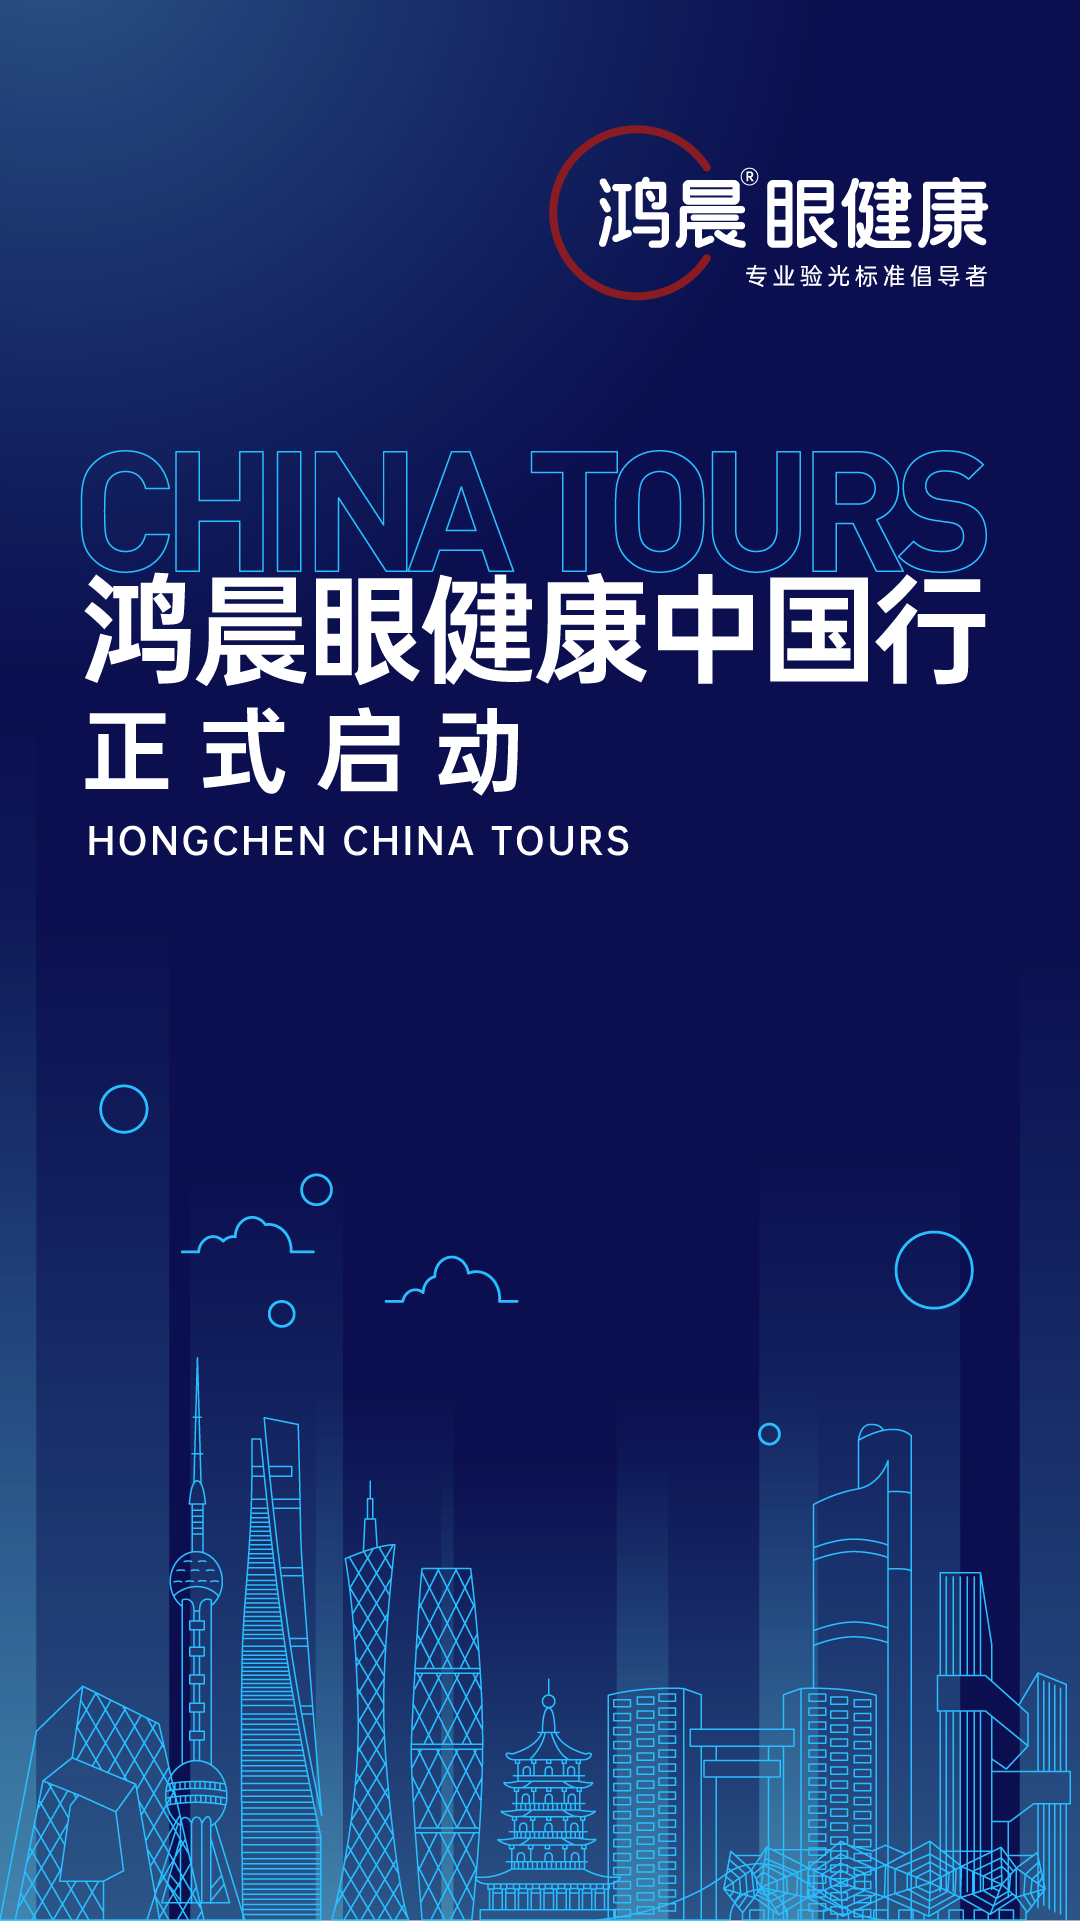 Hongchen Eye Health China Tour is officially launched! Meet you in Shandong·Qingdao